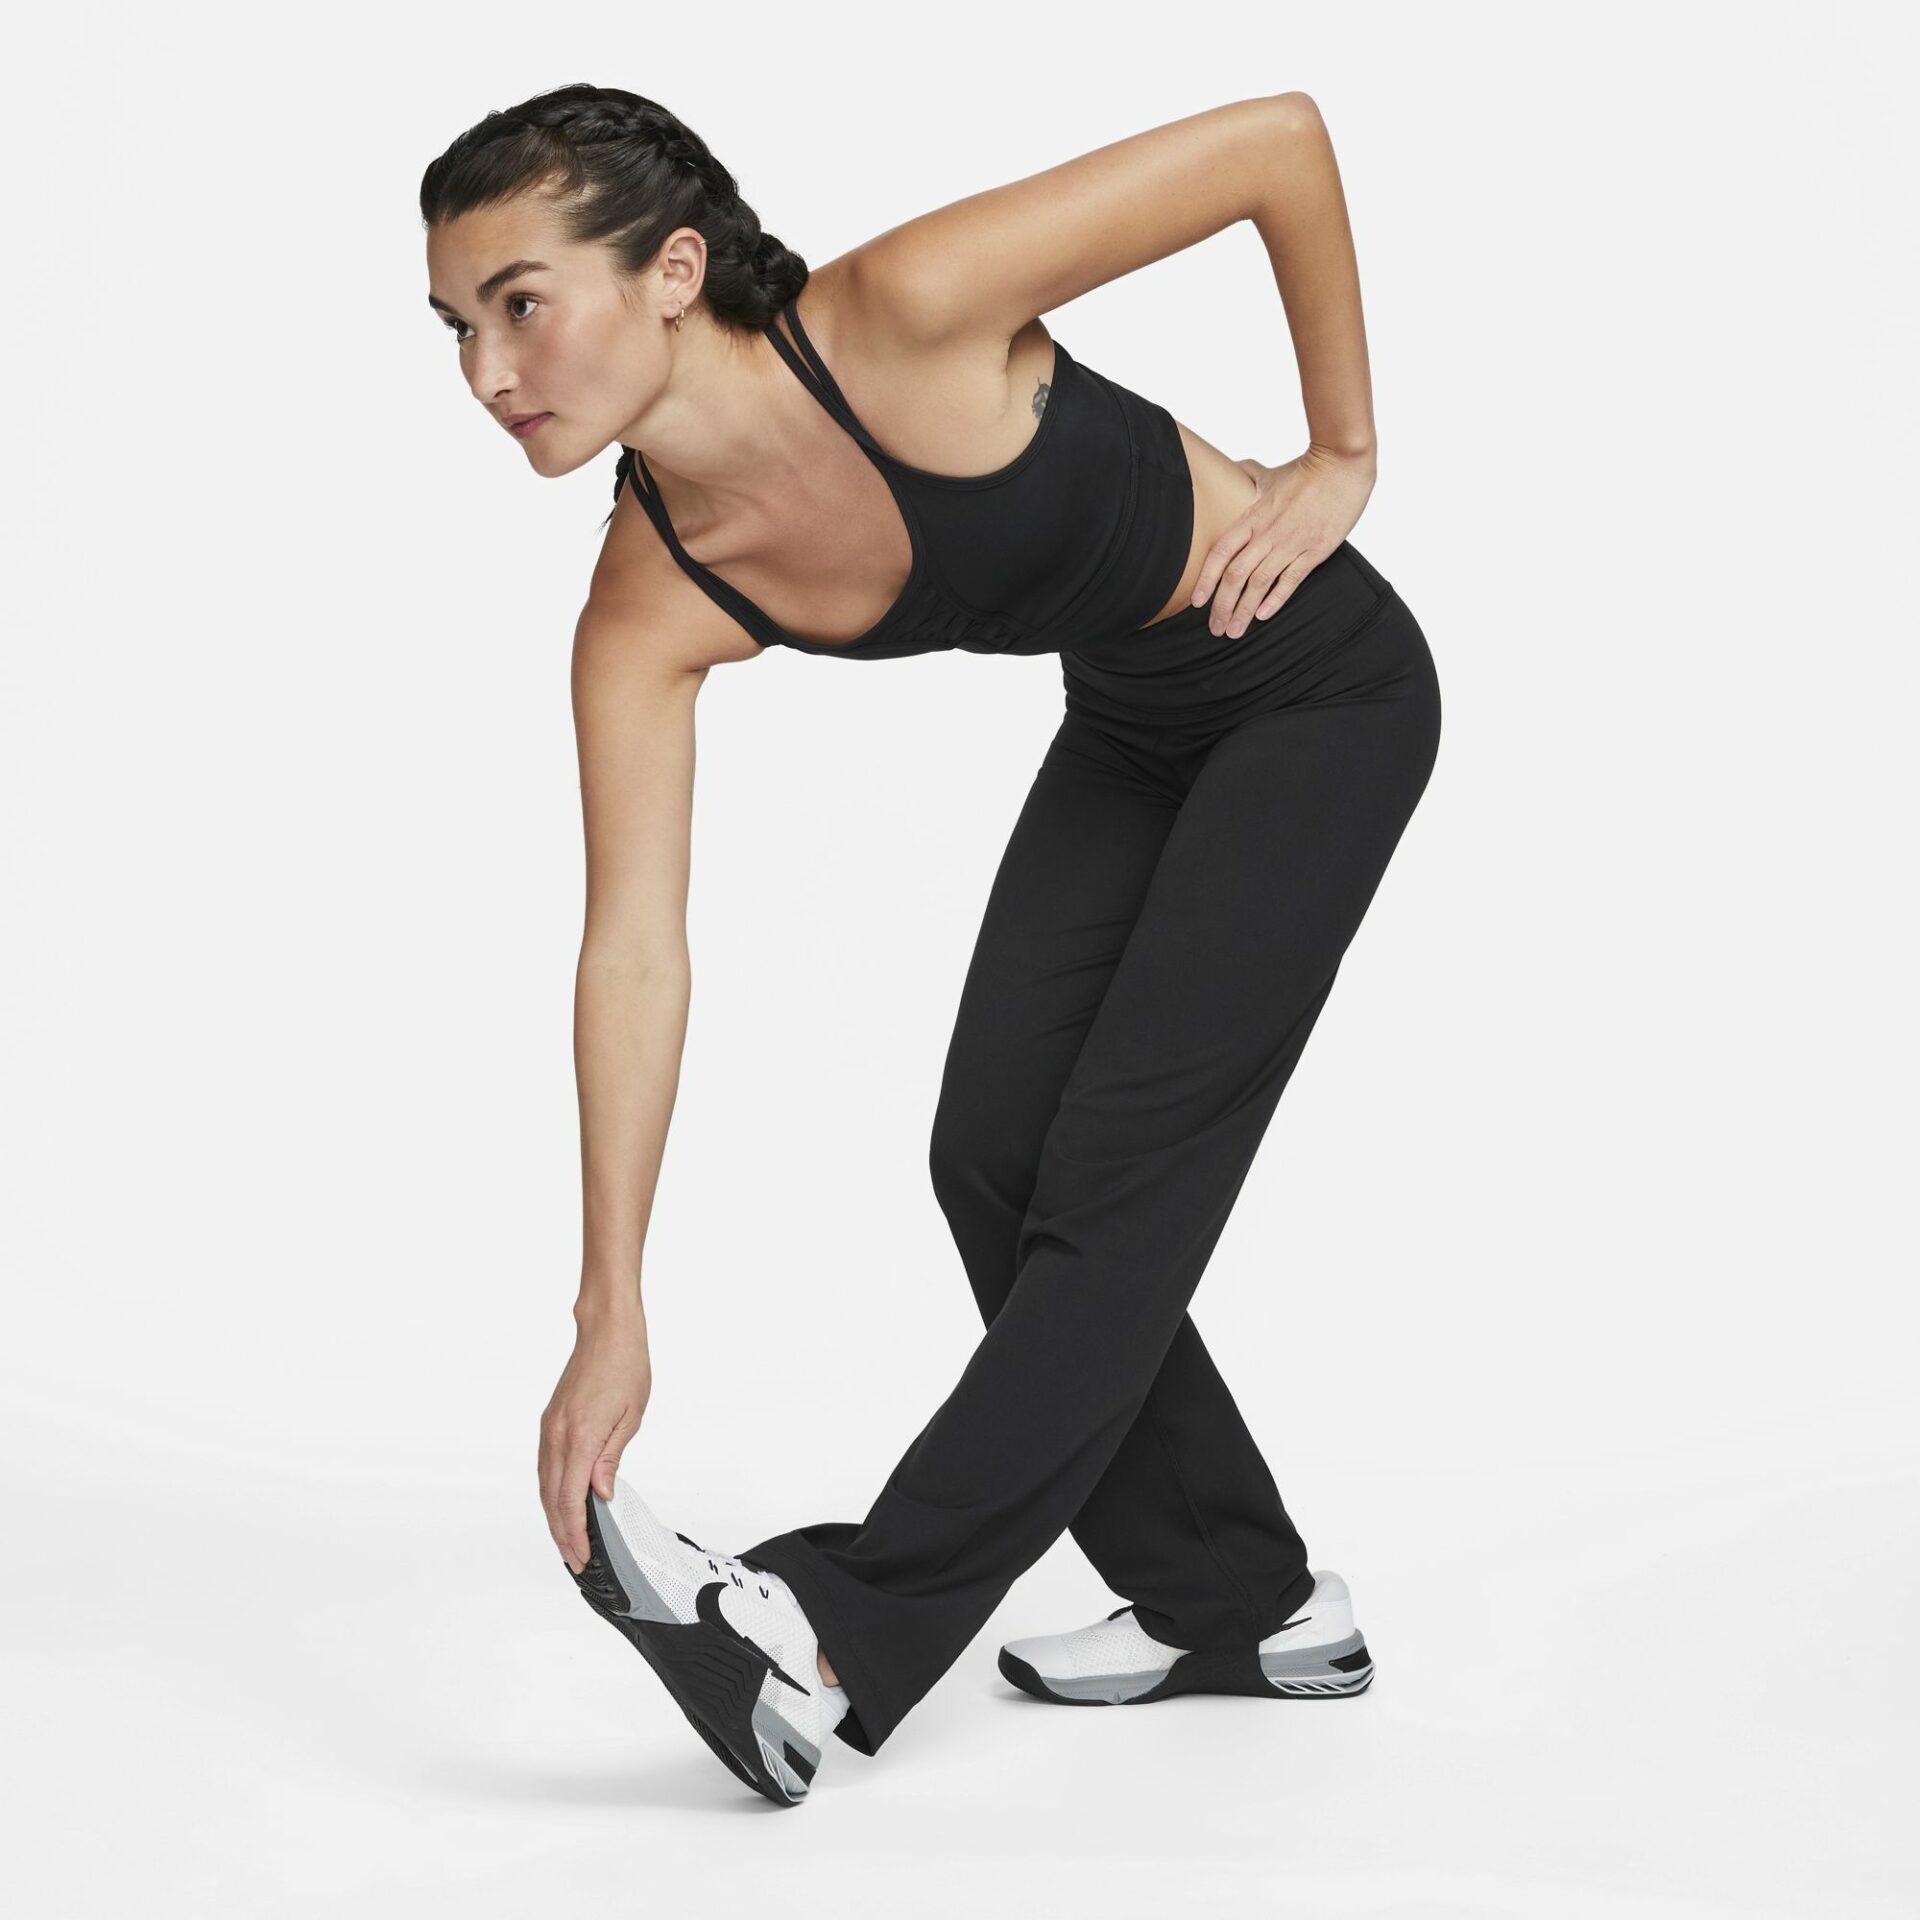 Nike Power Women's Training Trousers.